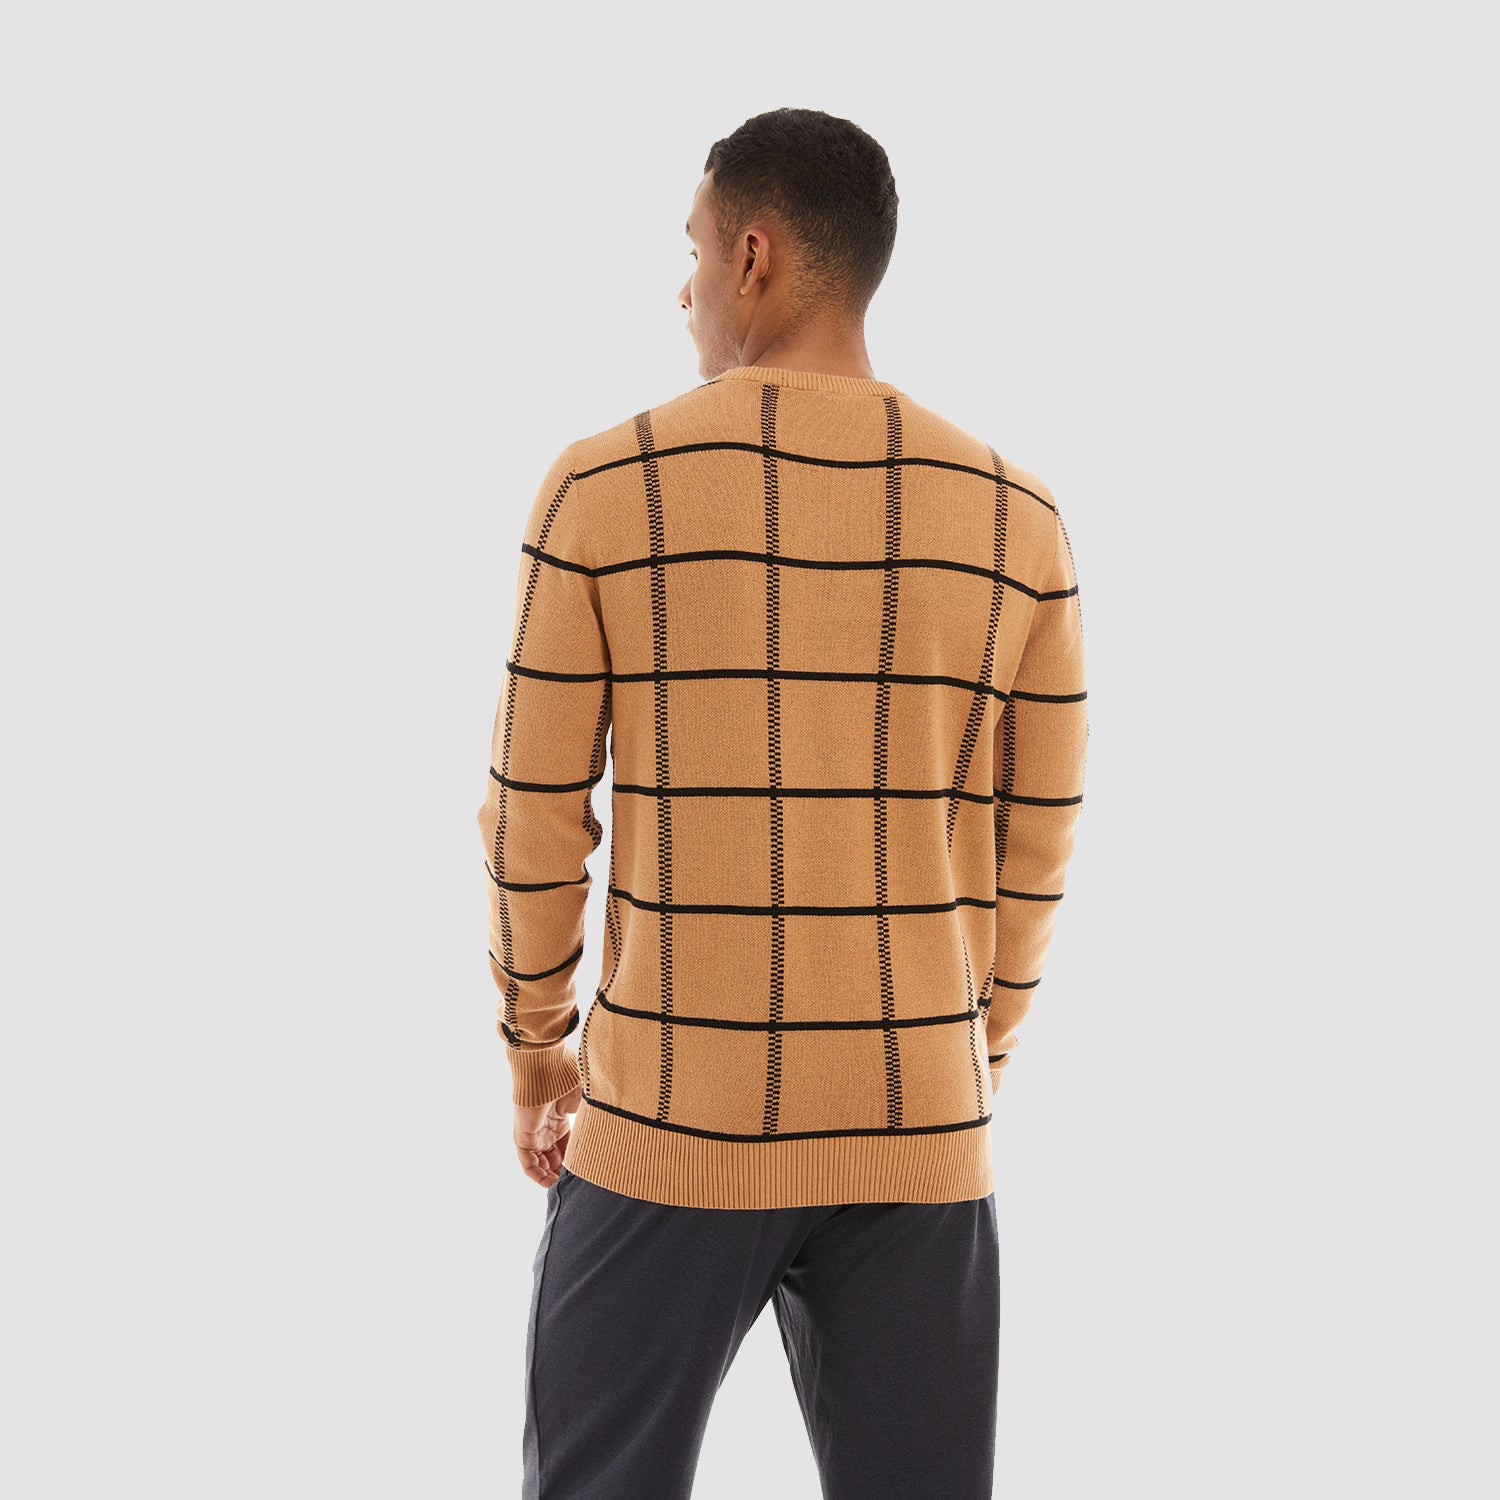 Men's Casual Knitted Sweaters Crewneck Pullover Cotton Sweatshirt Soft Lightweight Autumn